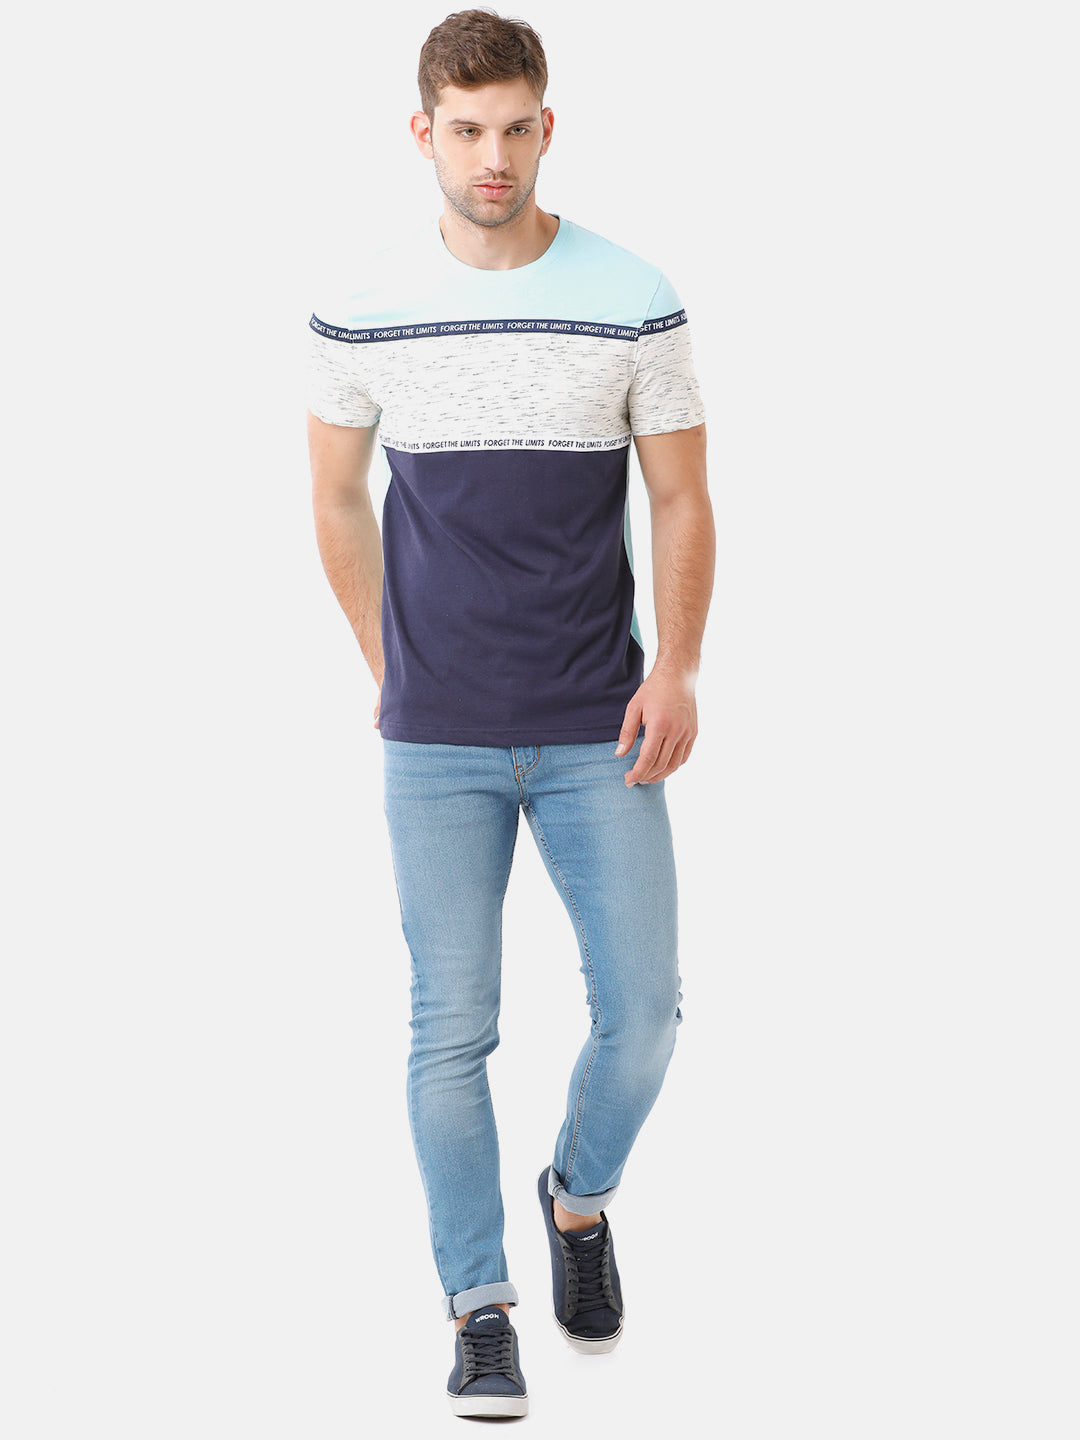 CP BRO Men's Cotton Half Sleeve Color Block Slim Fit Round Neck Multicolor T-Shirt | Brcn 469 B